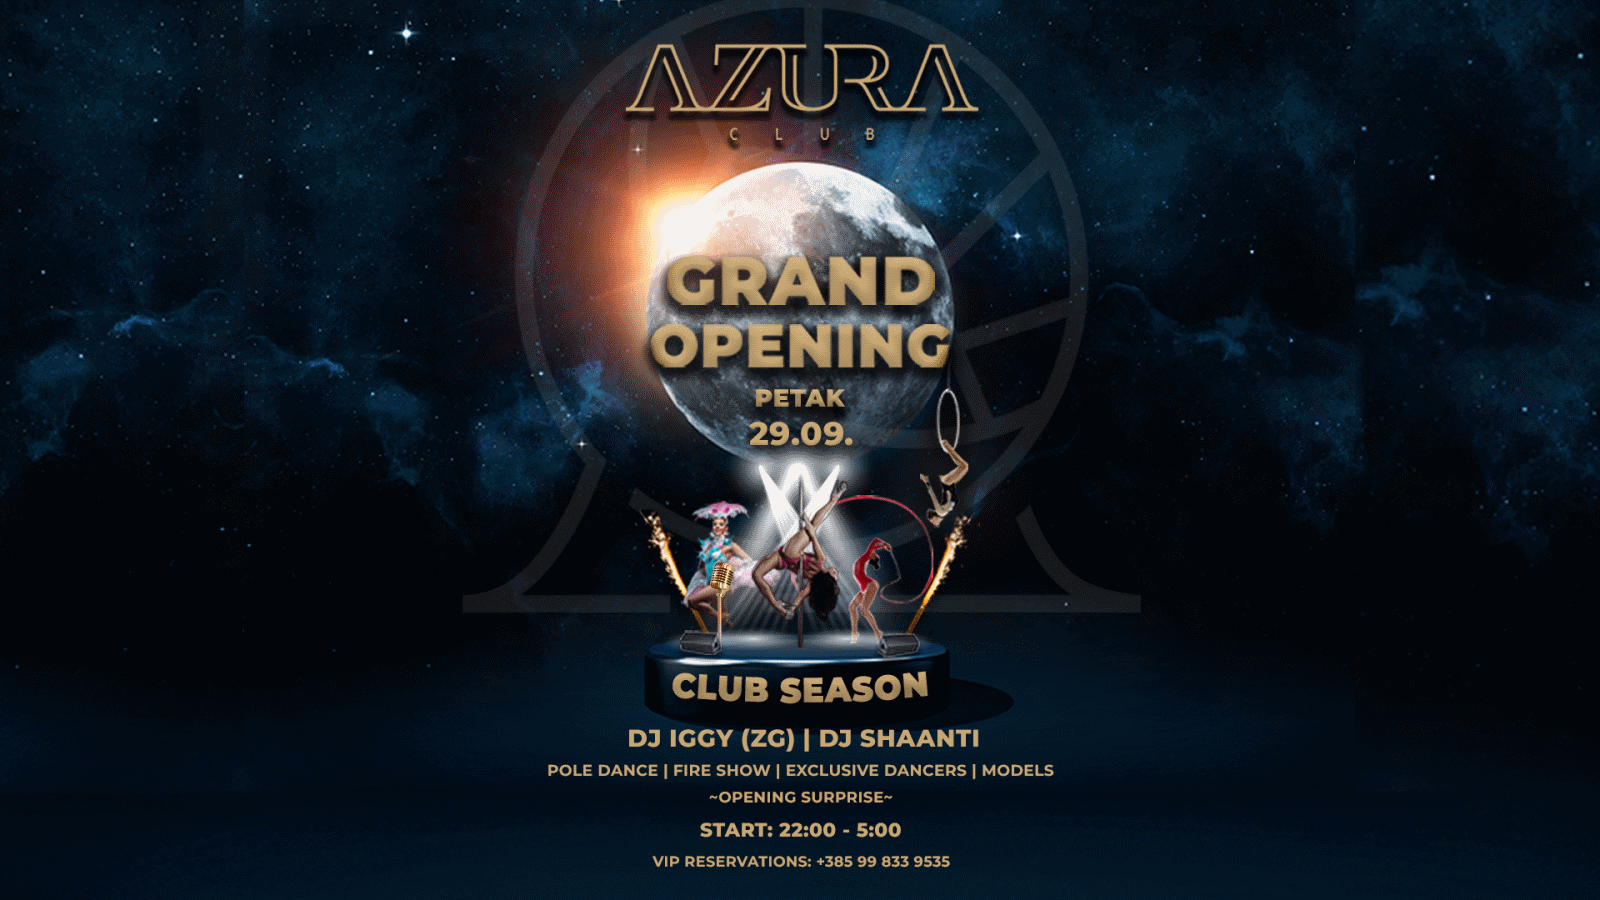 Azura Club nam priprema Grand Season Opening ovoga petka!